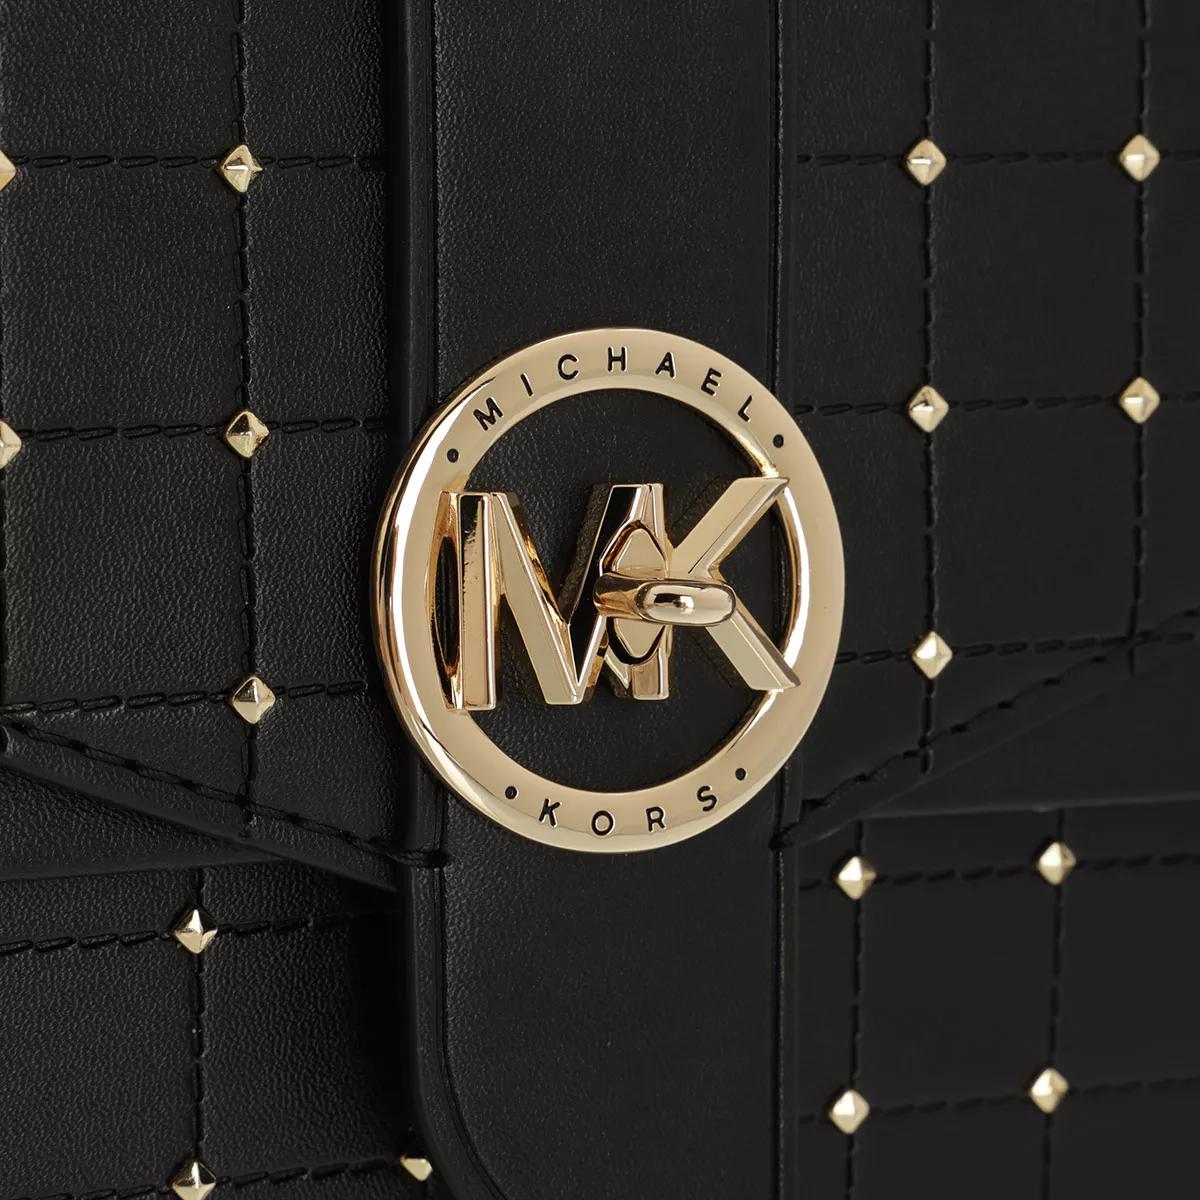 Michael Kors Greenwich Sun Leather Small Convertible Crossbody Bag Gold  Chain